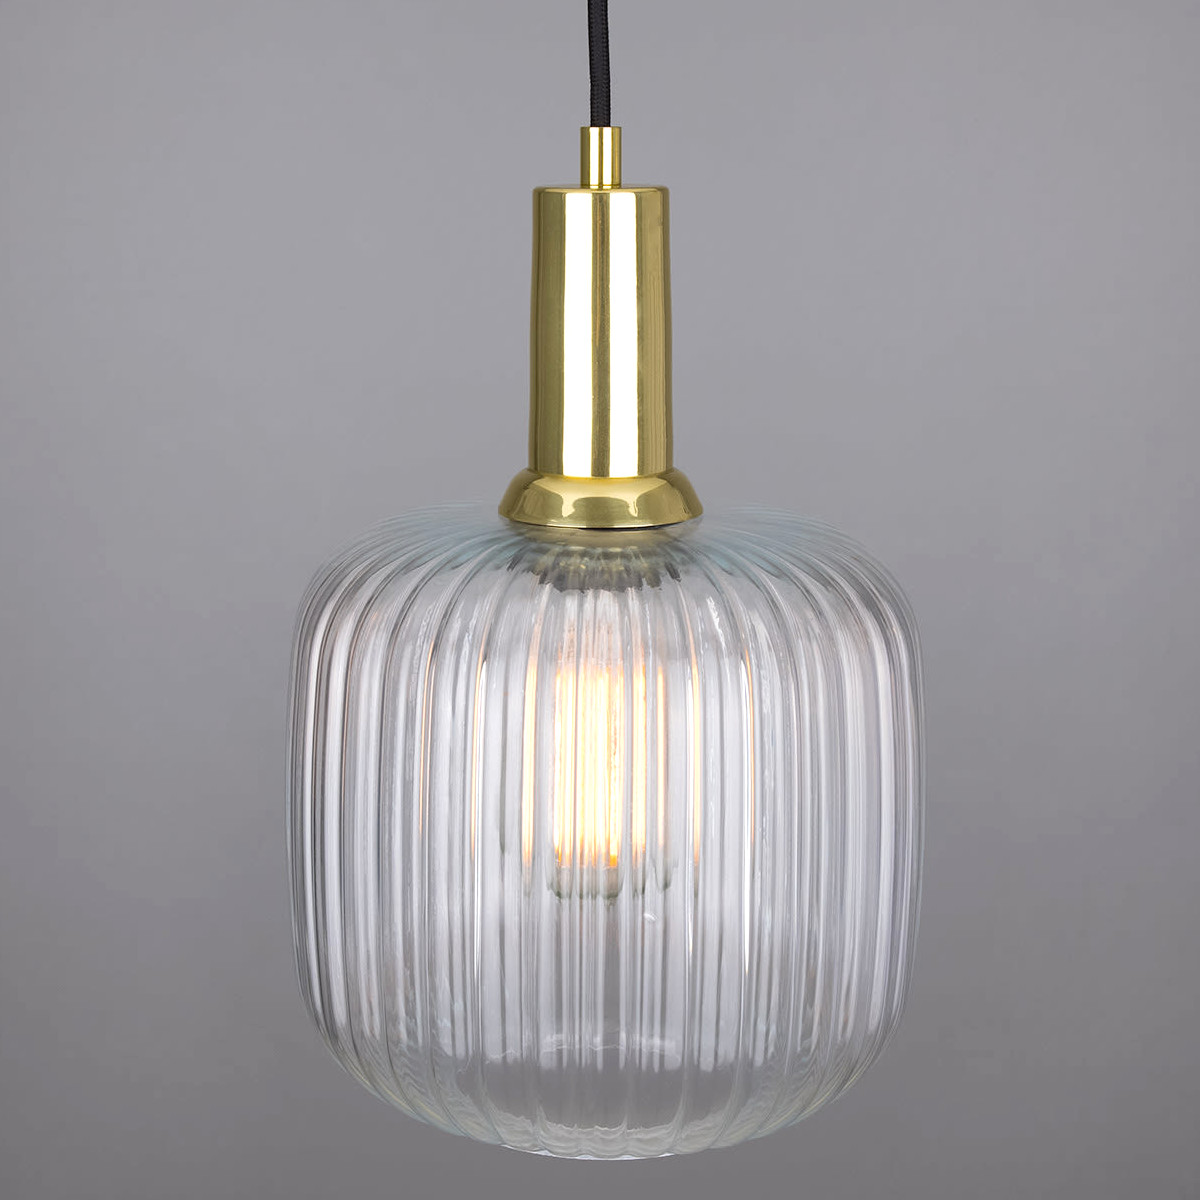 Pendant lamp with cylindrical prisma shade - Casa Lumi